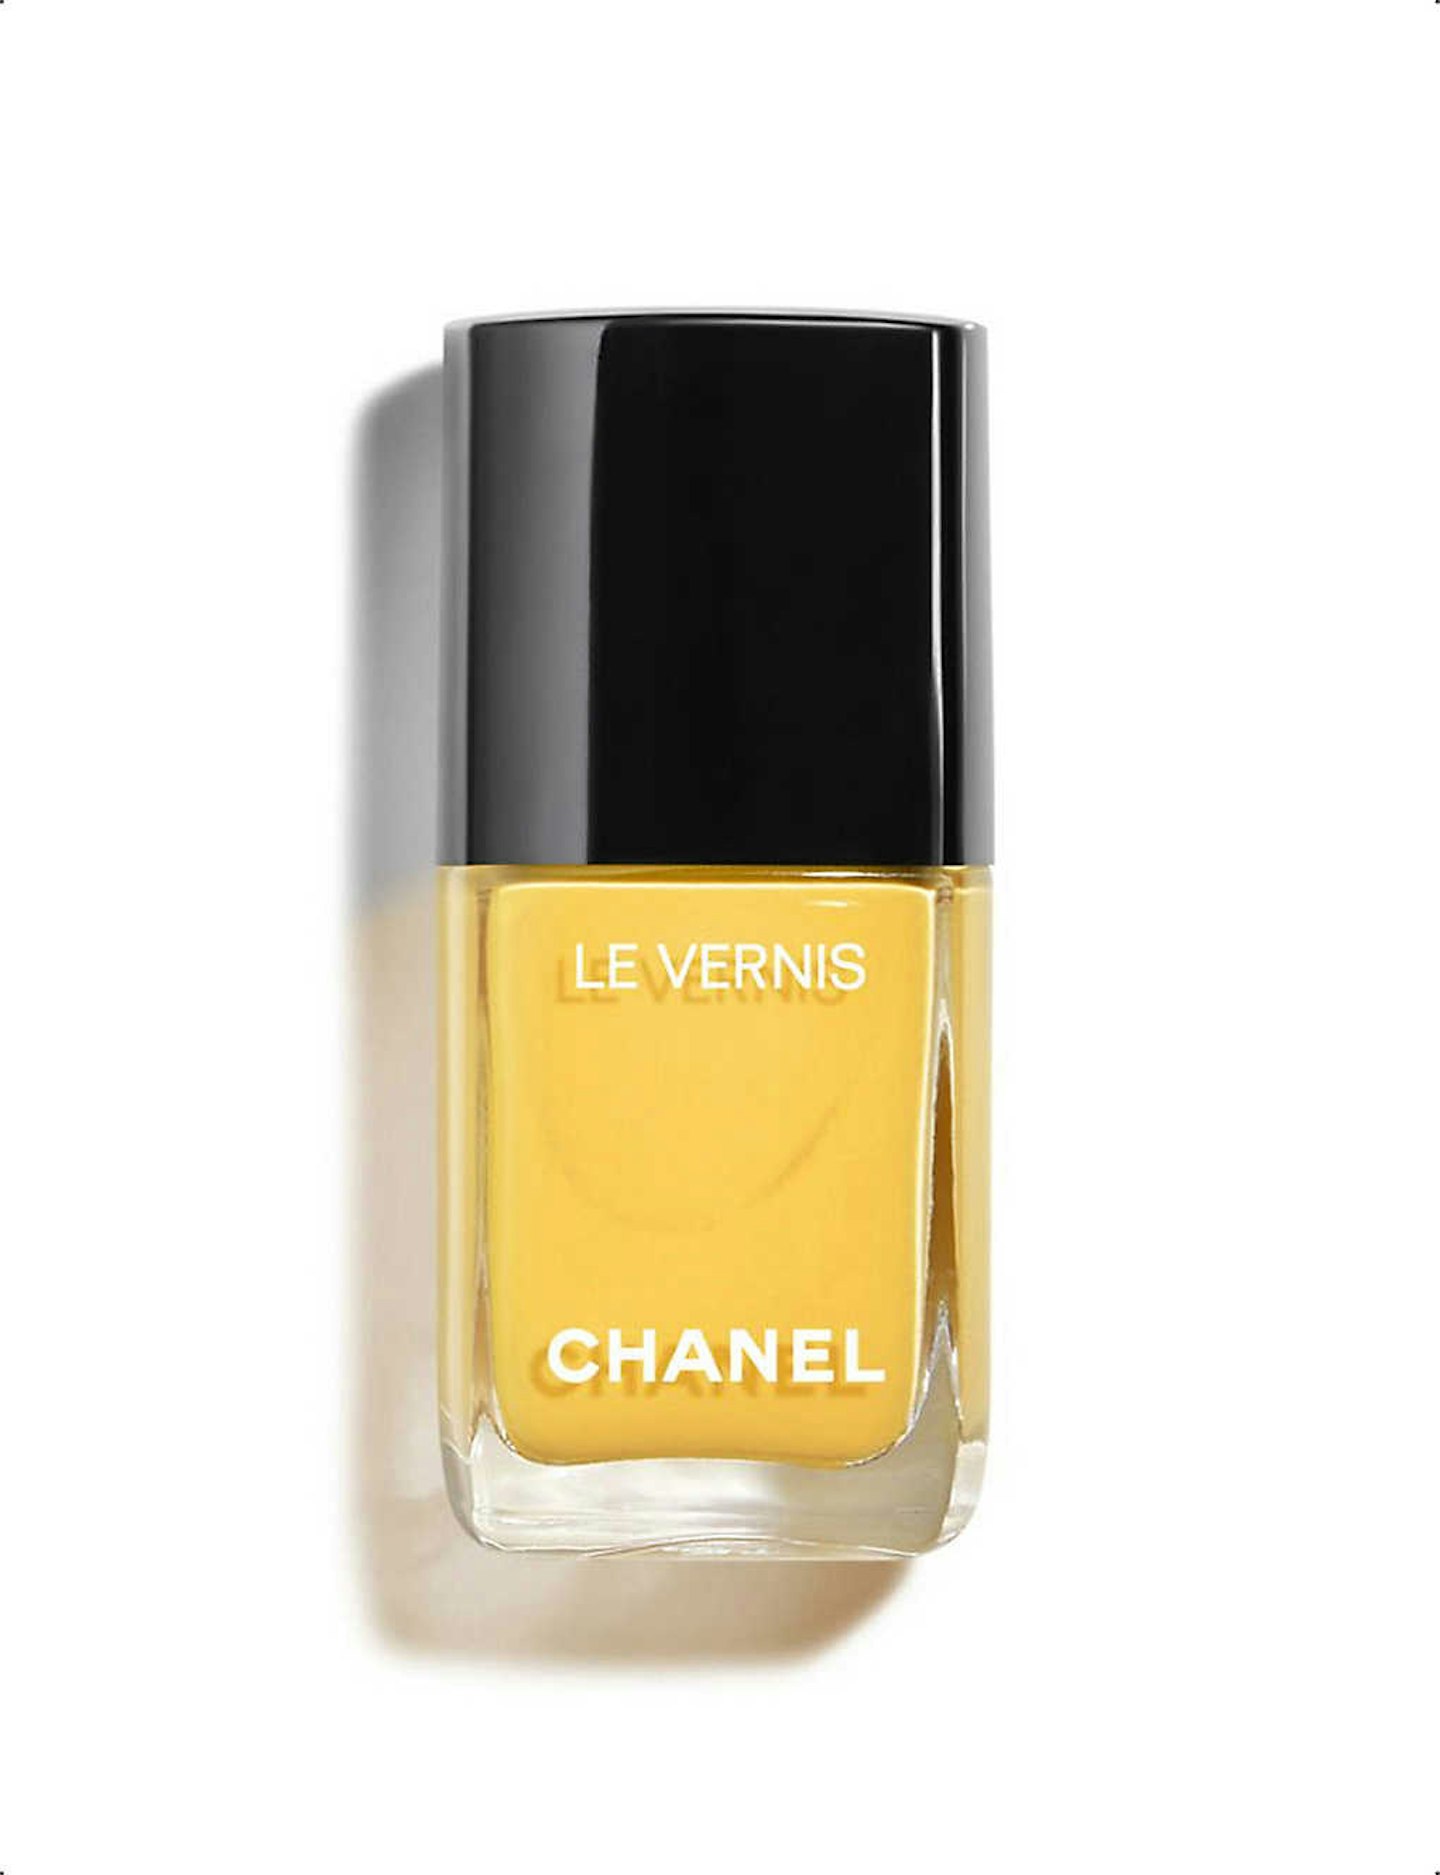 Chanel LE VERNIS Longwear Nail Colour in Giallo Napoli, £22